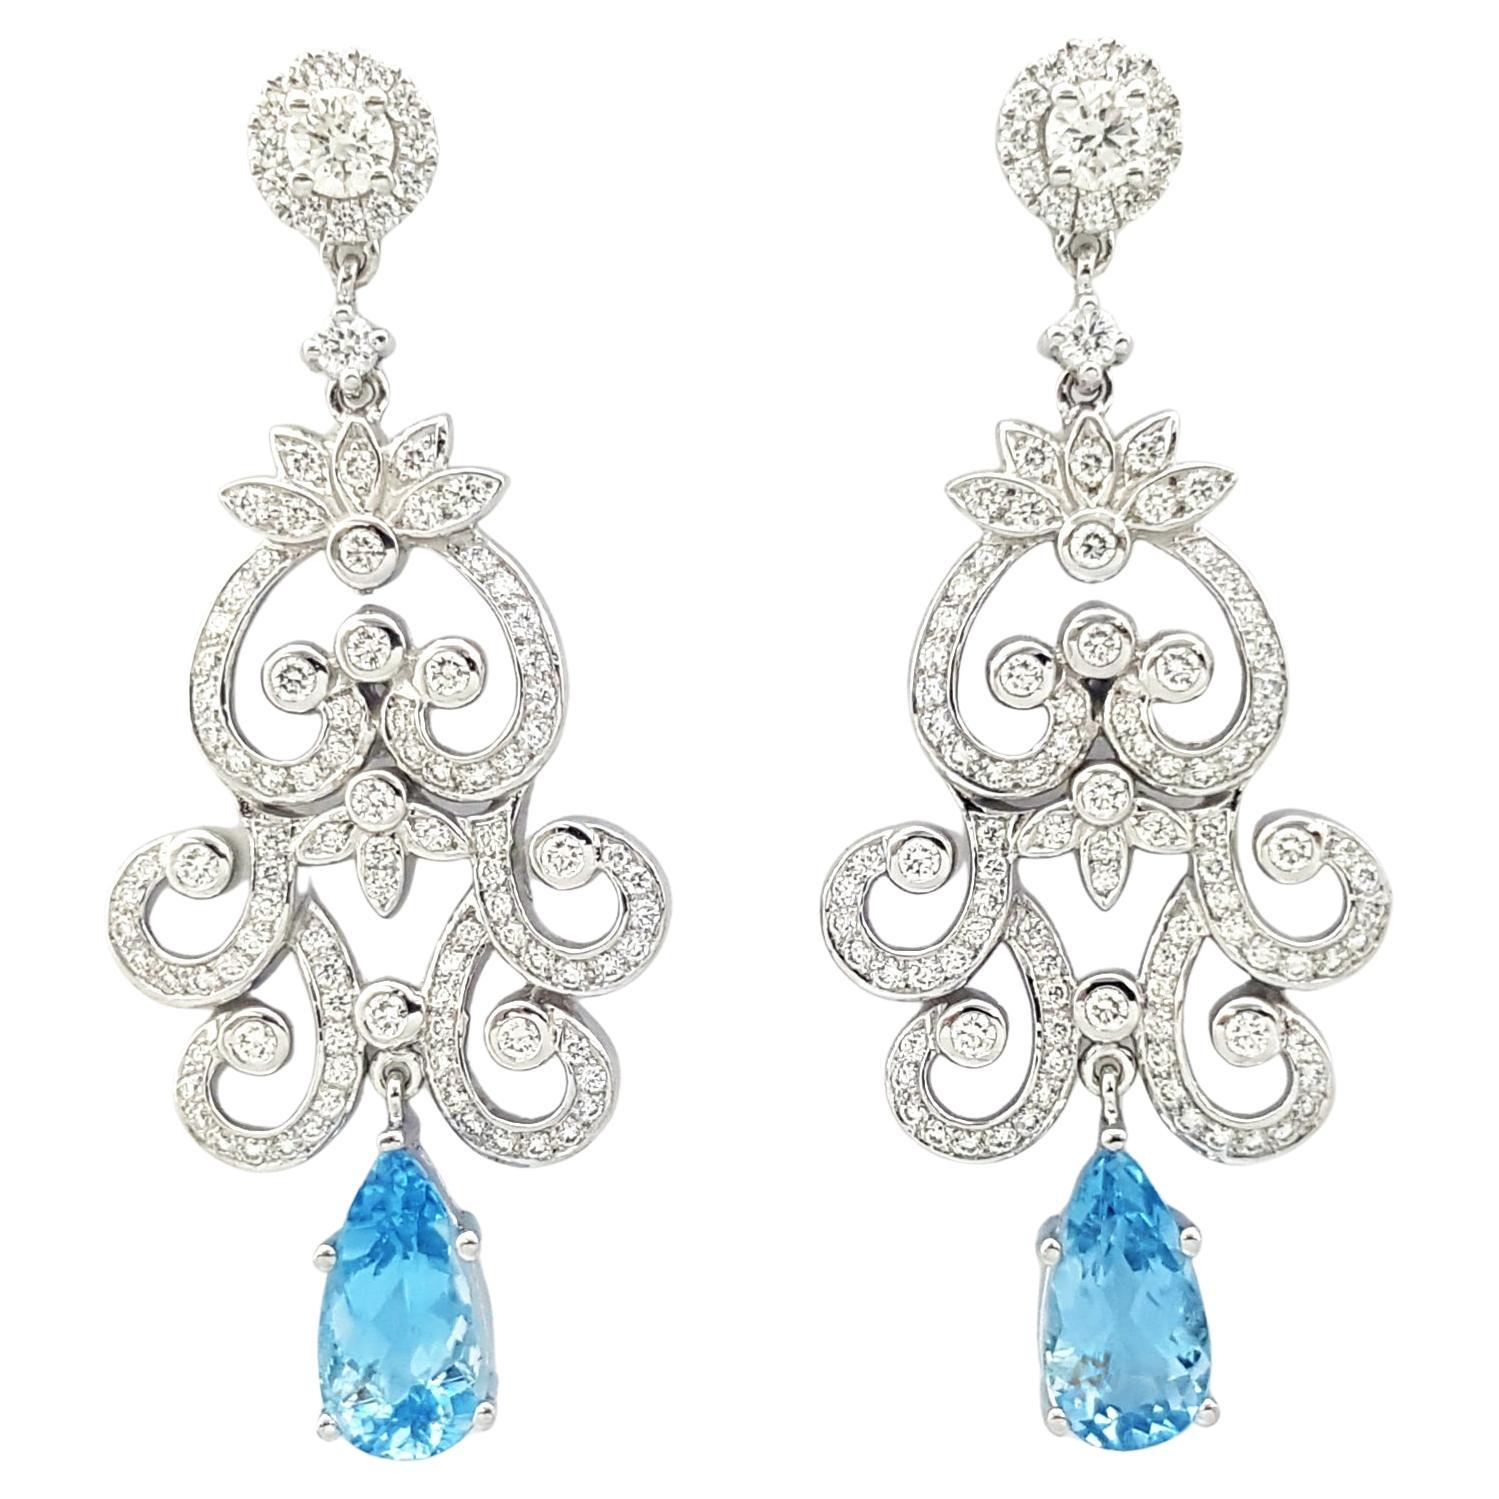 Aquamarine with Diamond Earrings set in 18K White Gold Settings